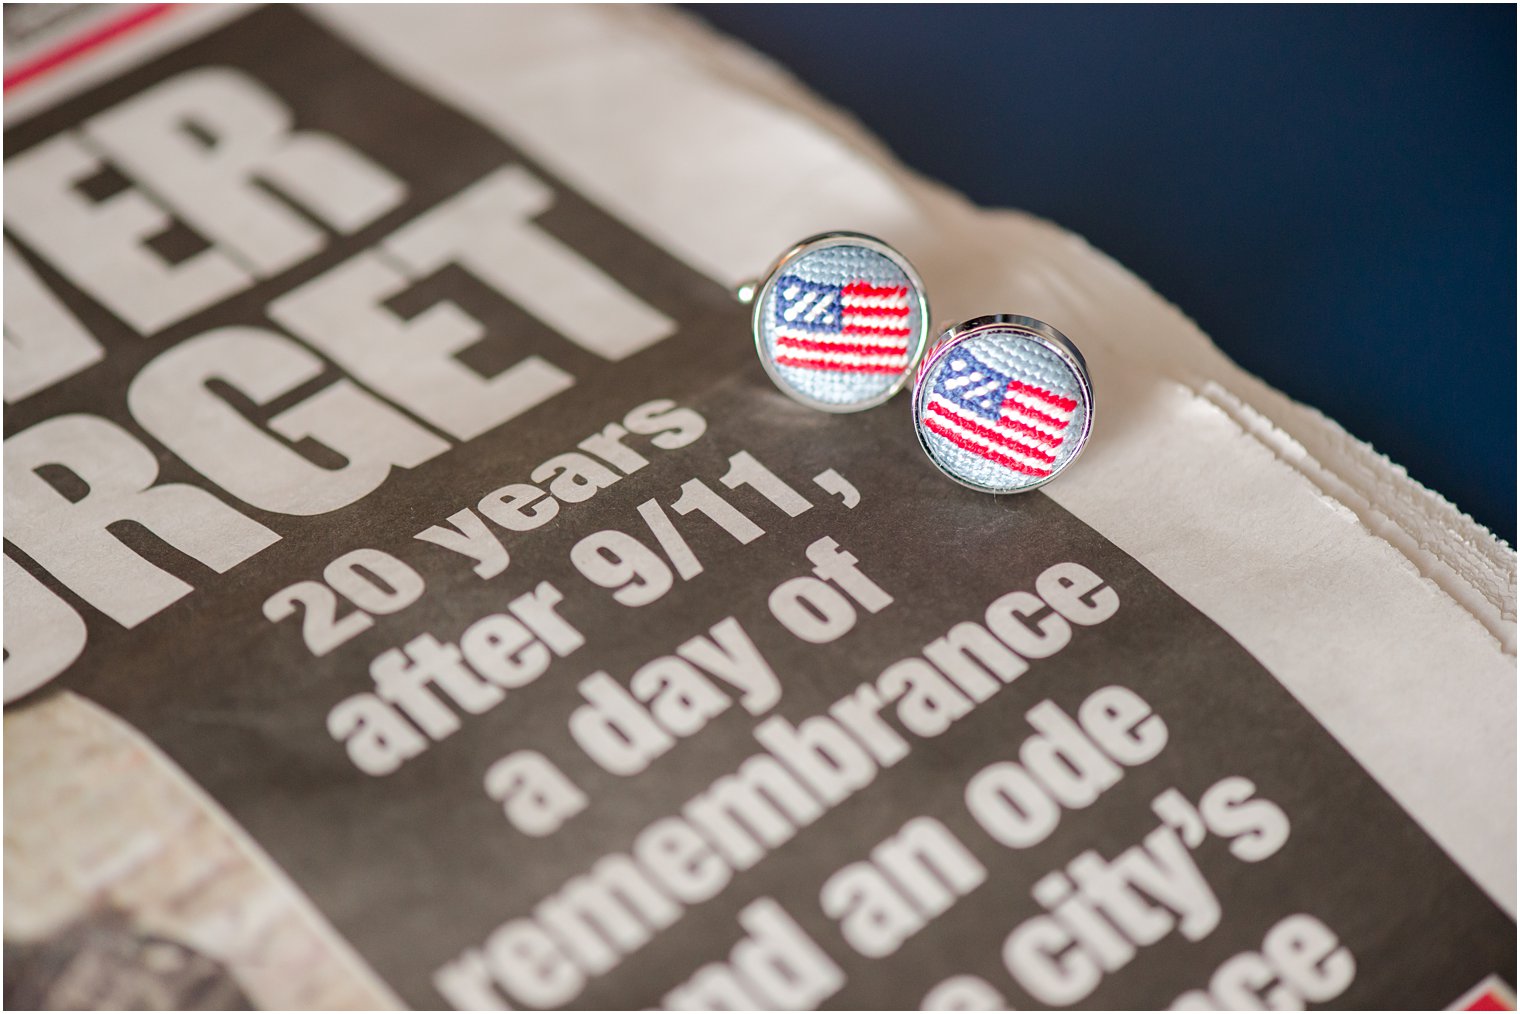 custom American flag cufflinks rest on anniversary 9/11 article in newspaper